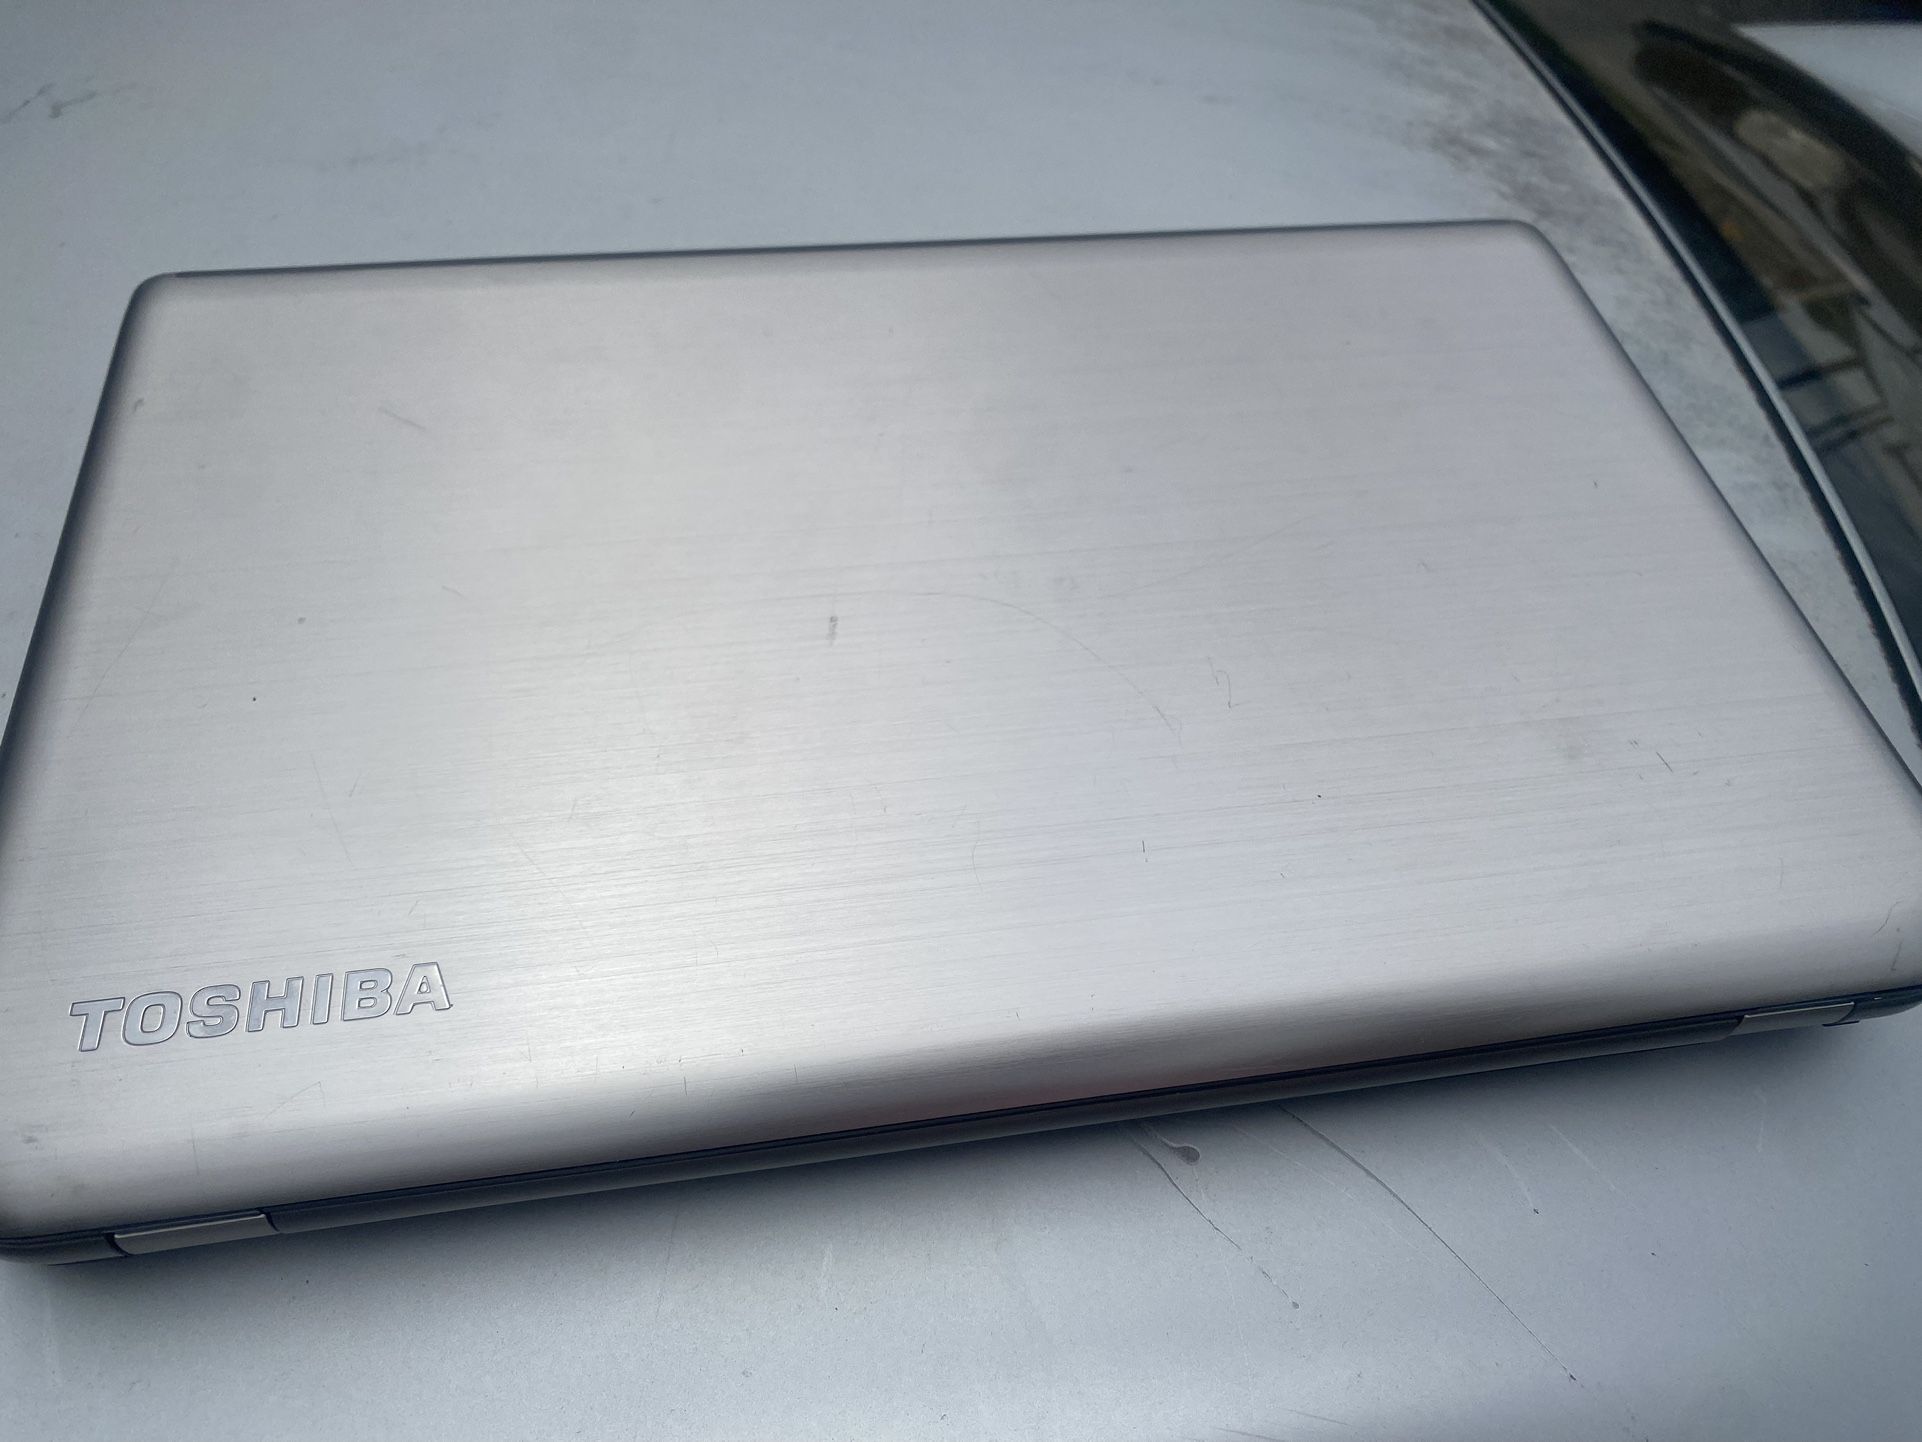 Toshiba laptop, no power cord